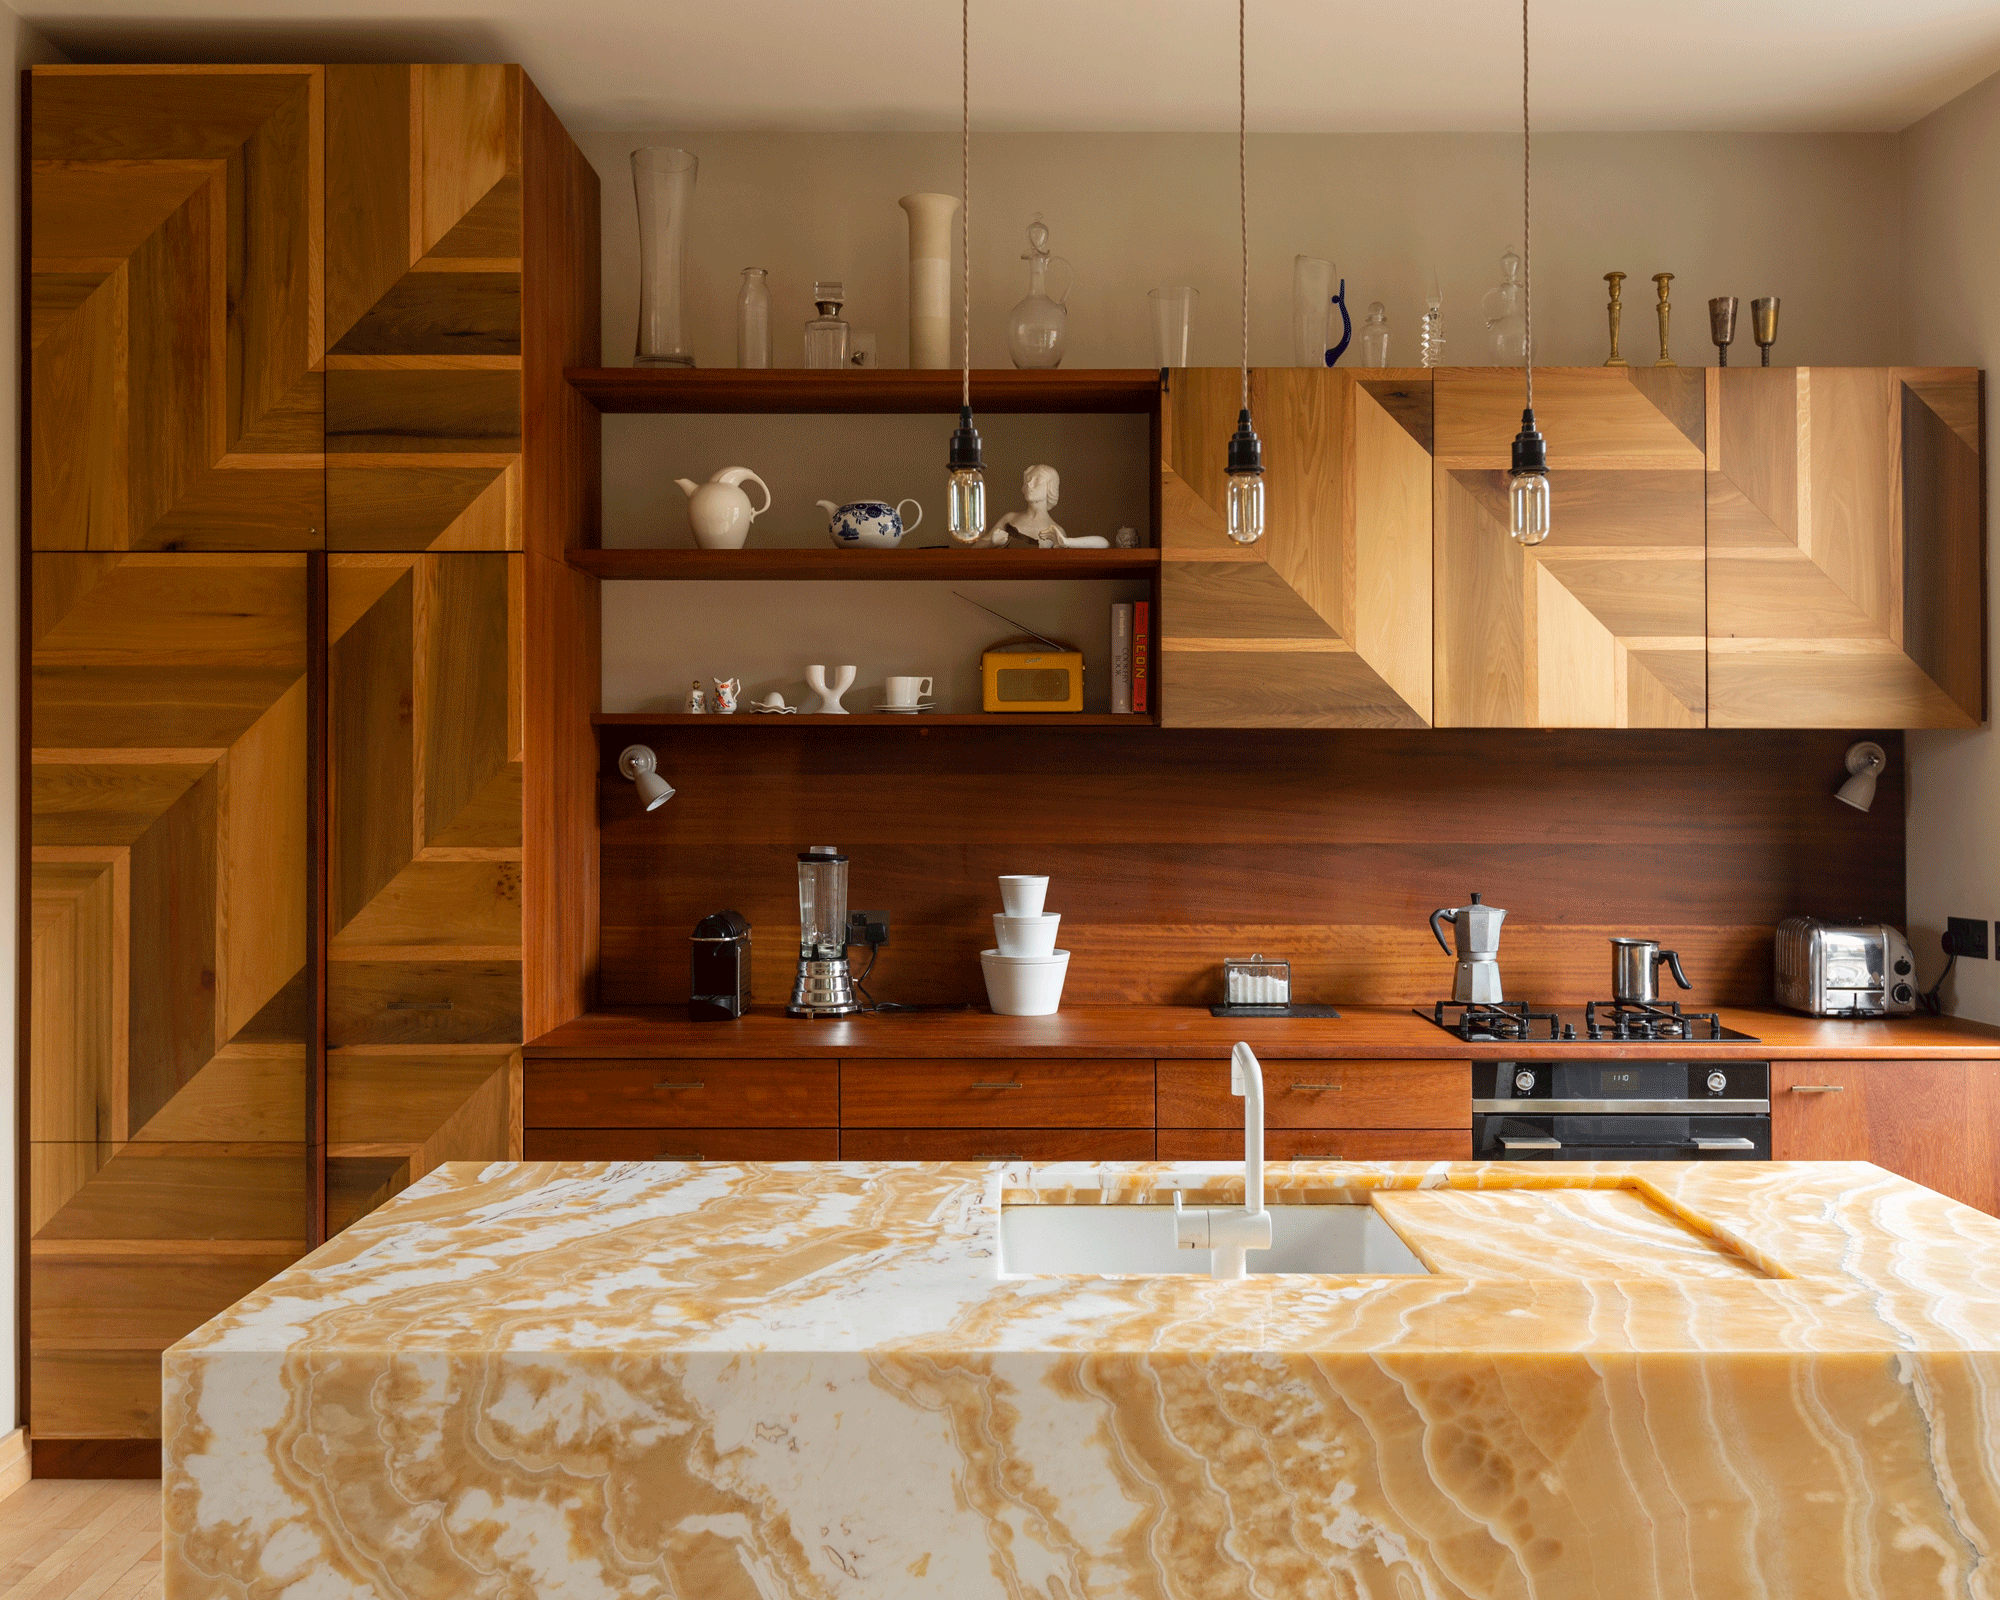 50+ Best Above Kitchen Cabinet Decor - YouTube